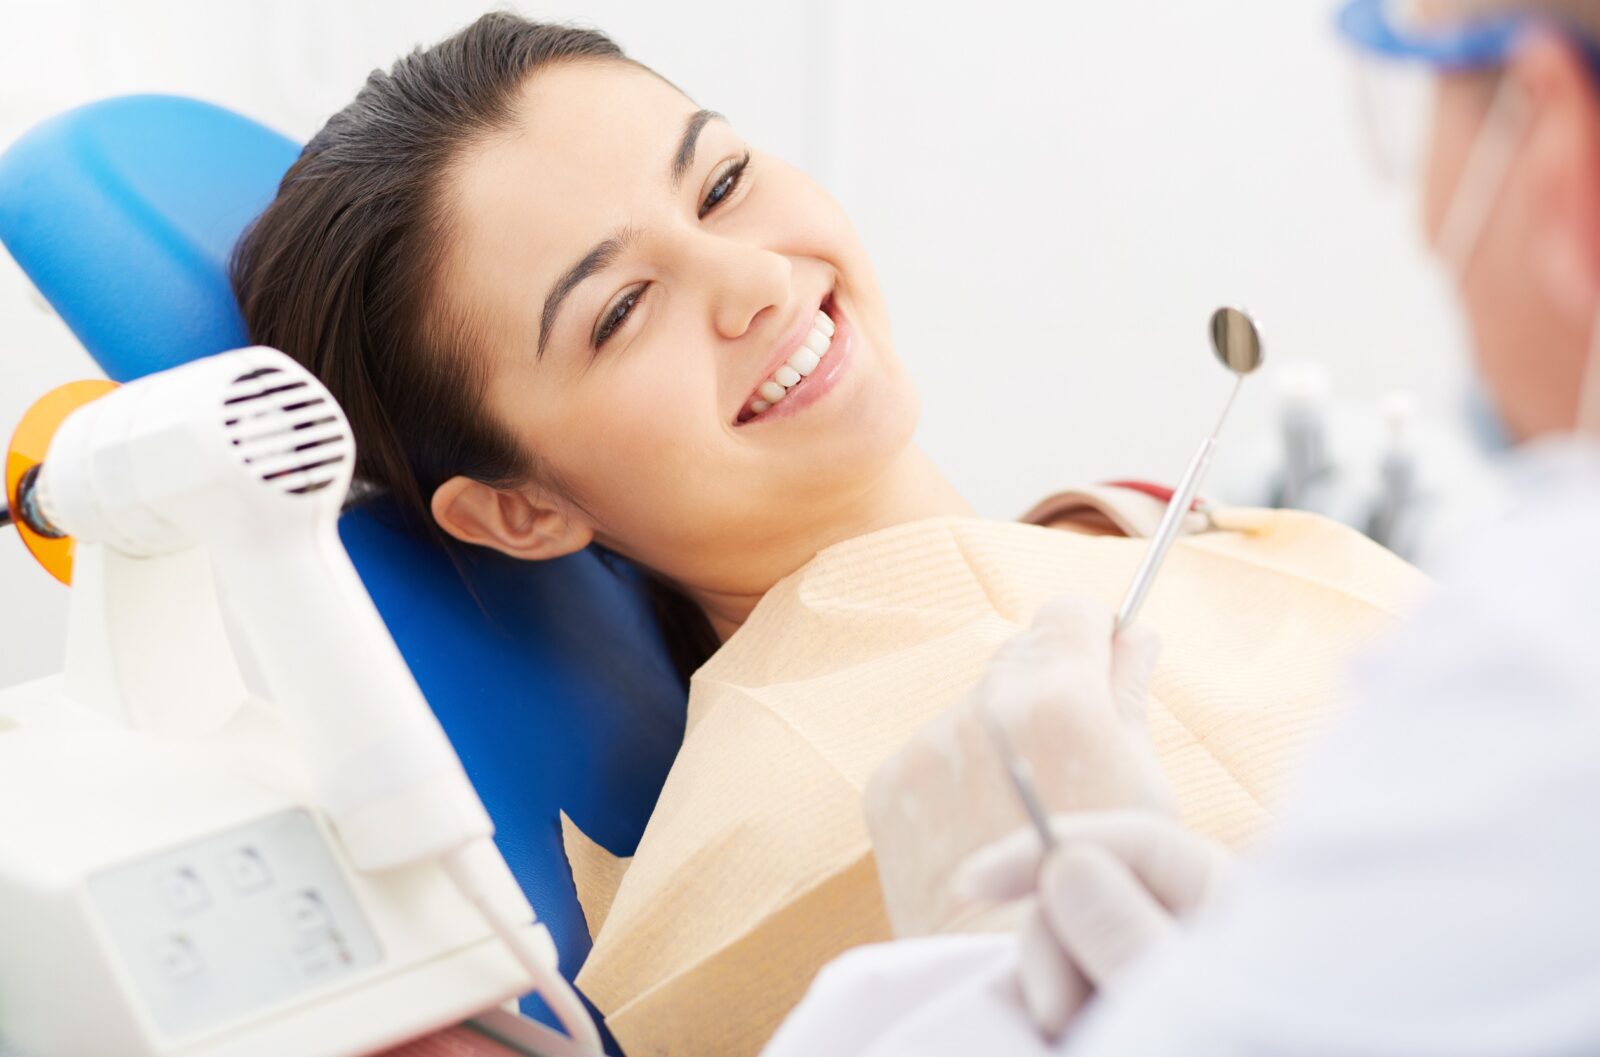 Dental Crowns and Dental Implants